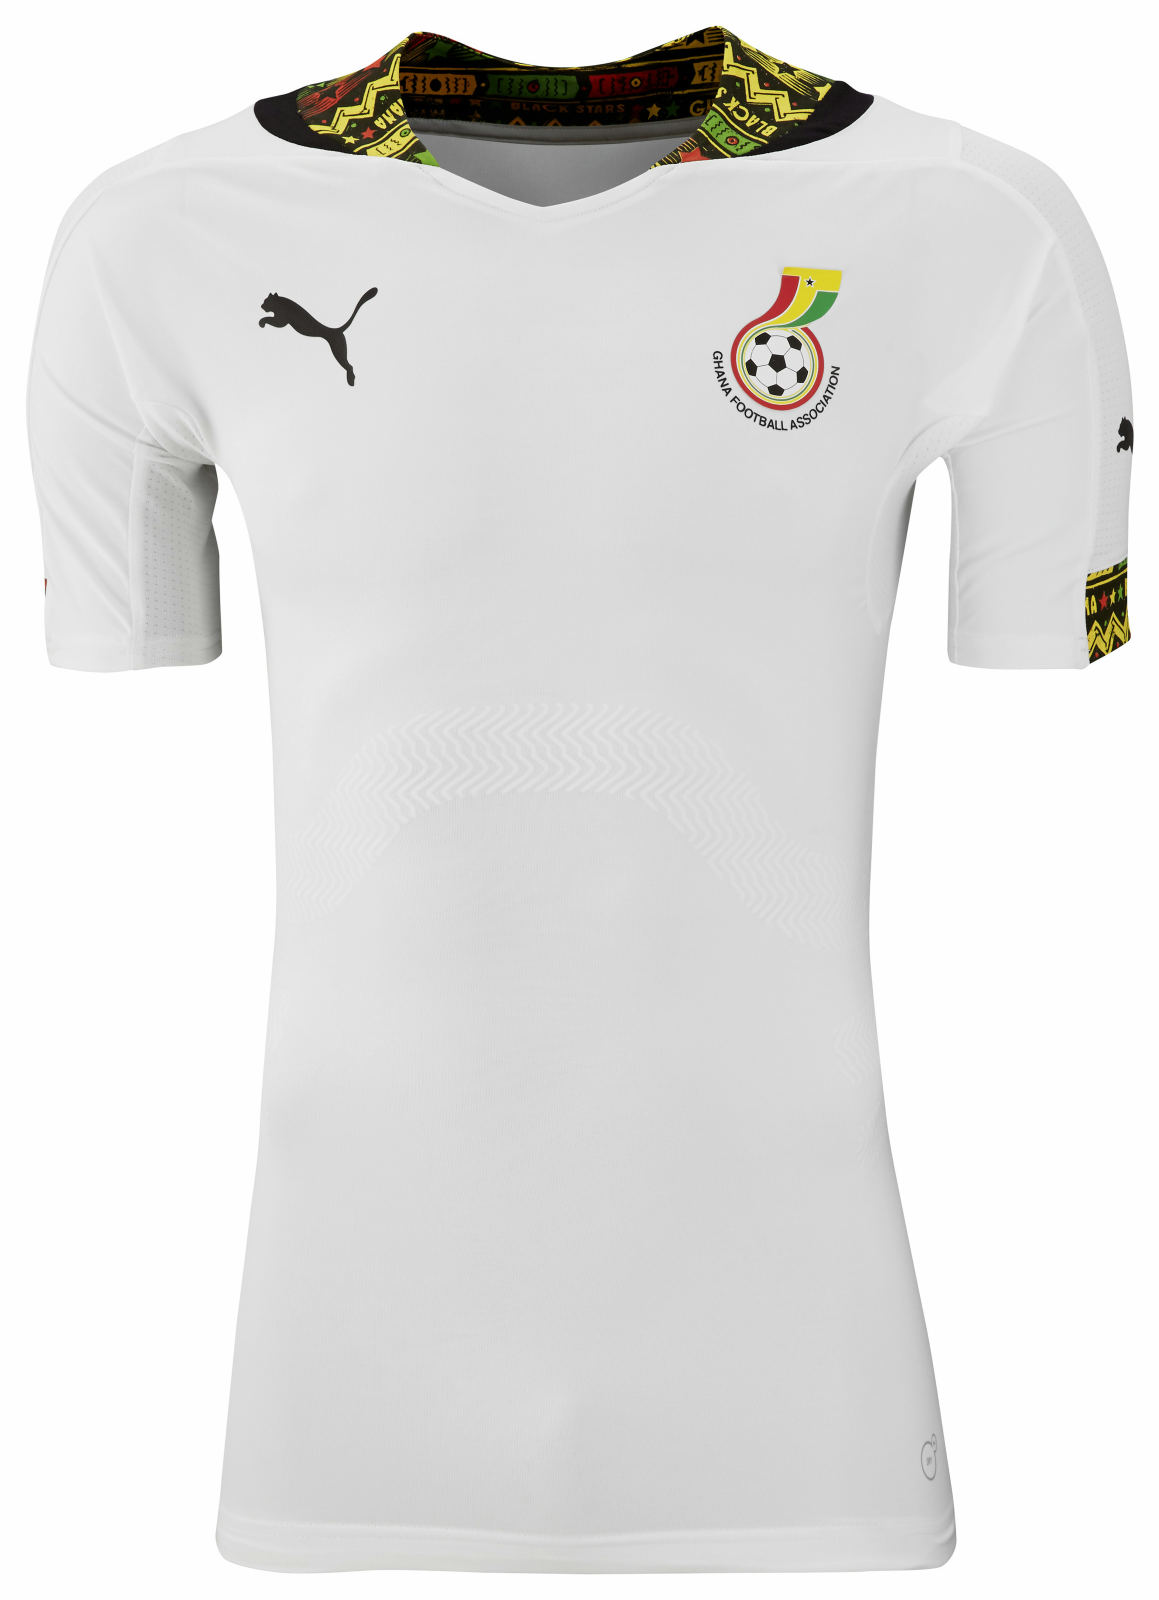 Ghana 2014 World Cup Jersey